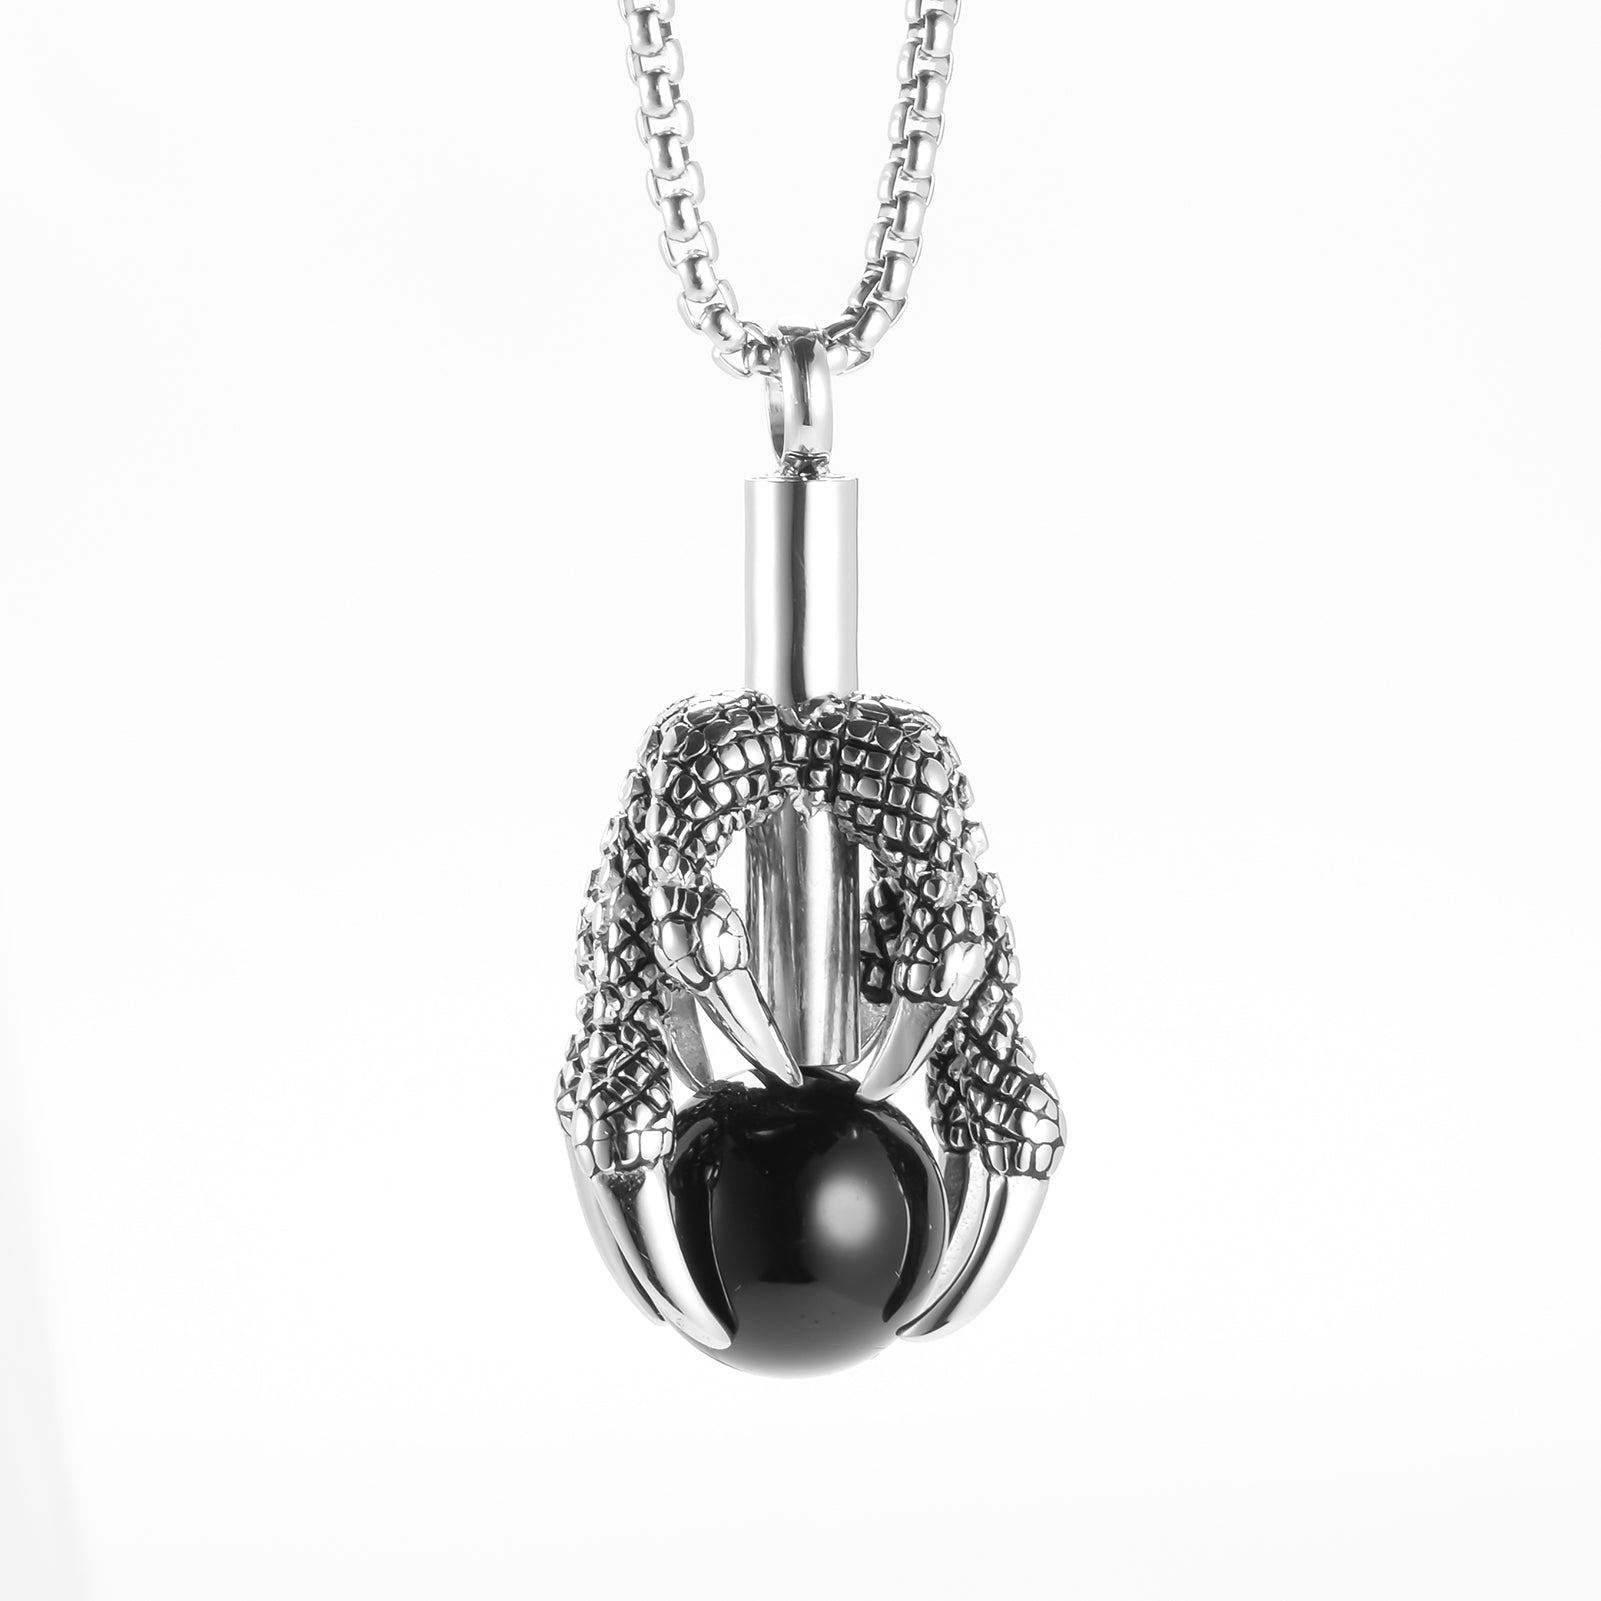 Unique Cremation Necklace Jewelry for Men